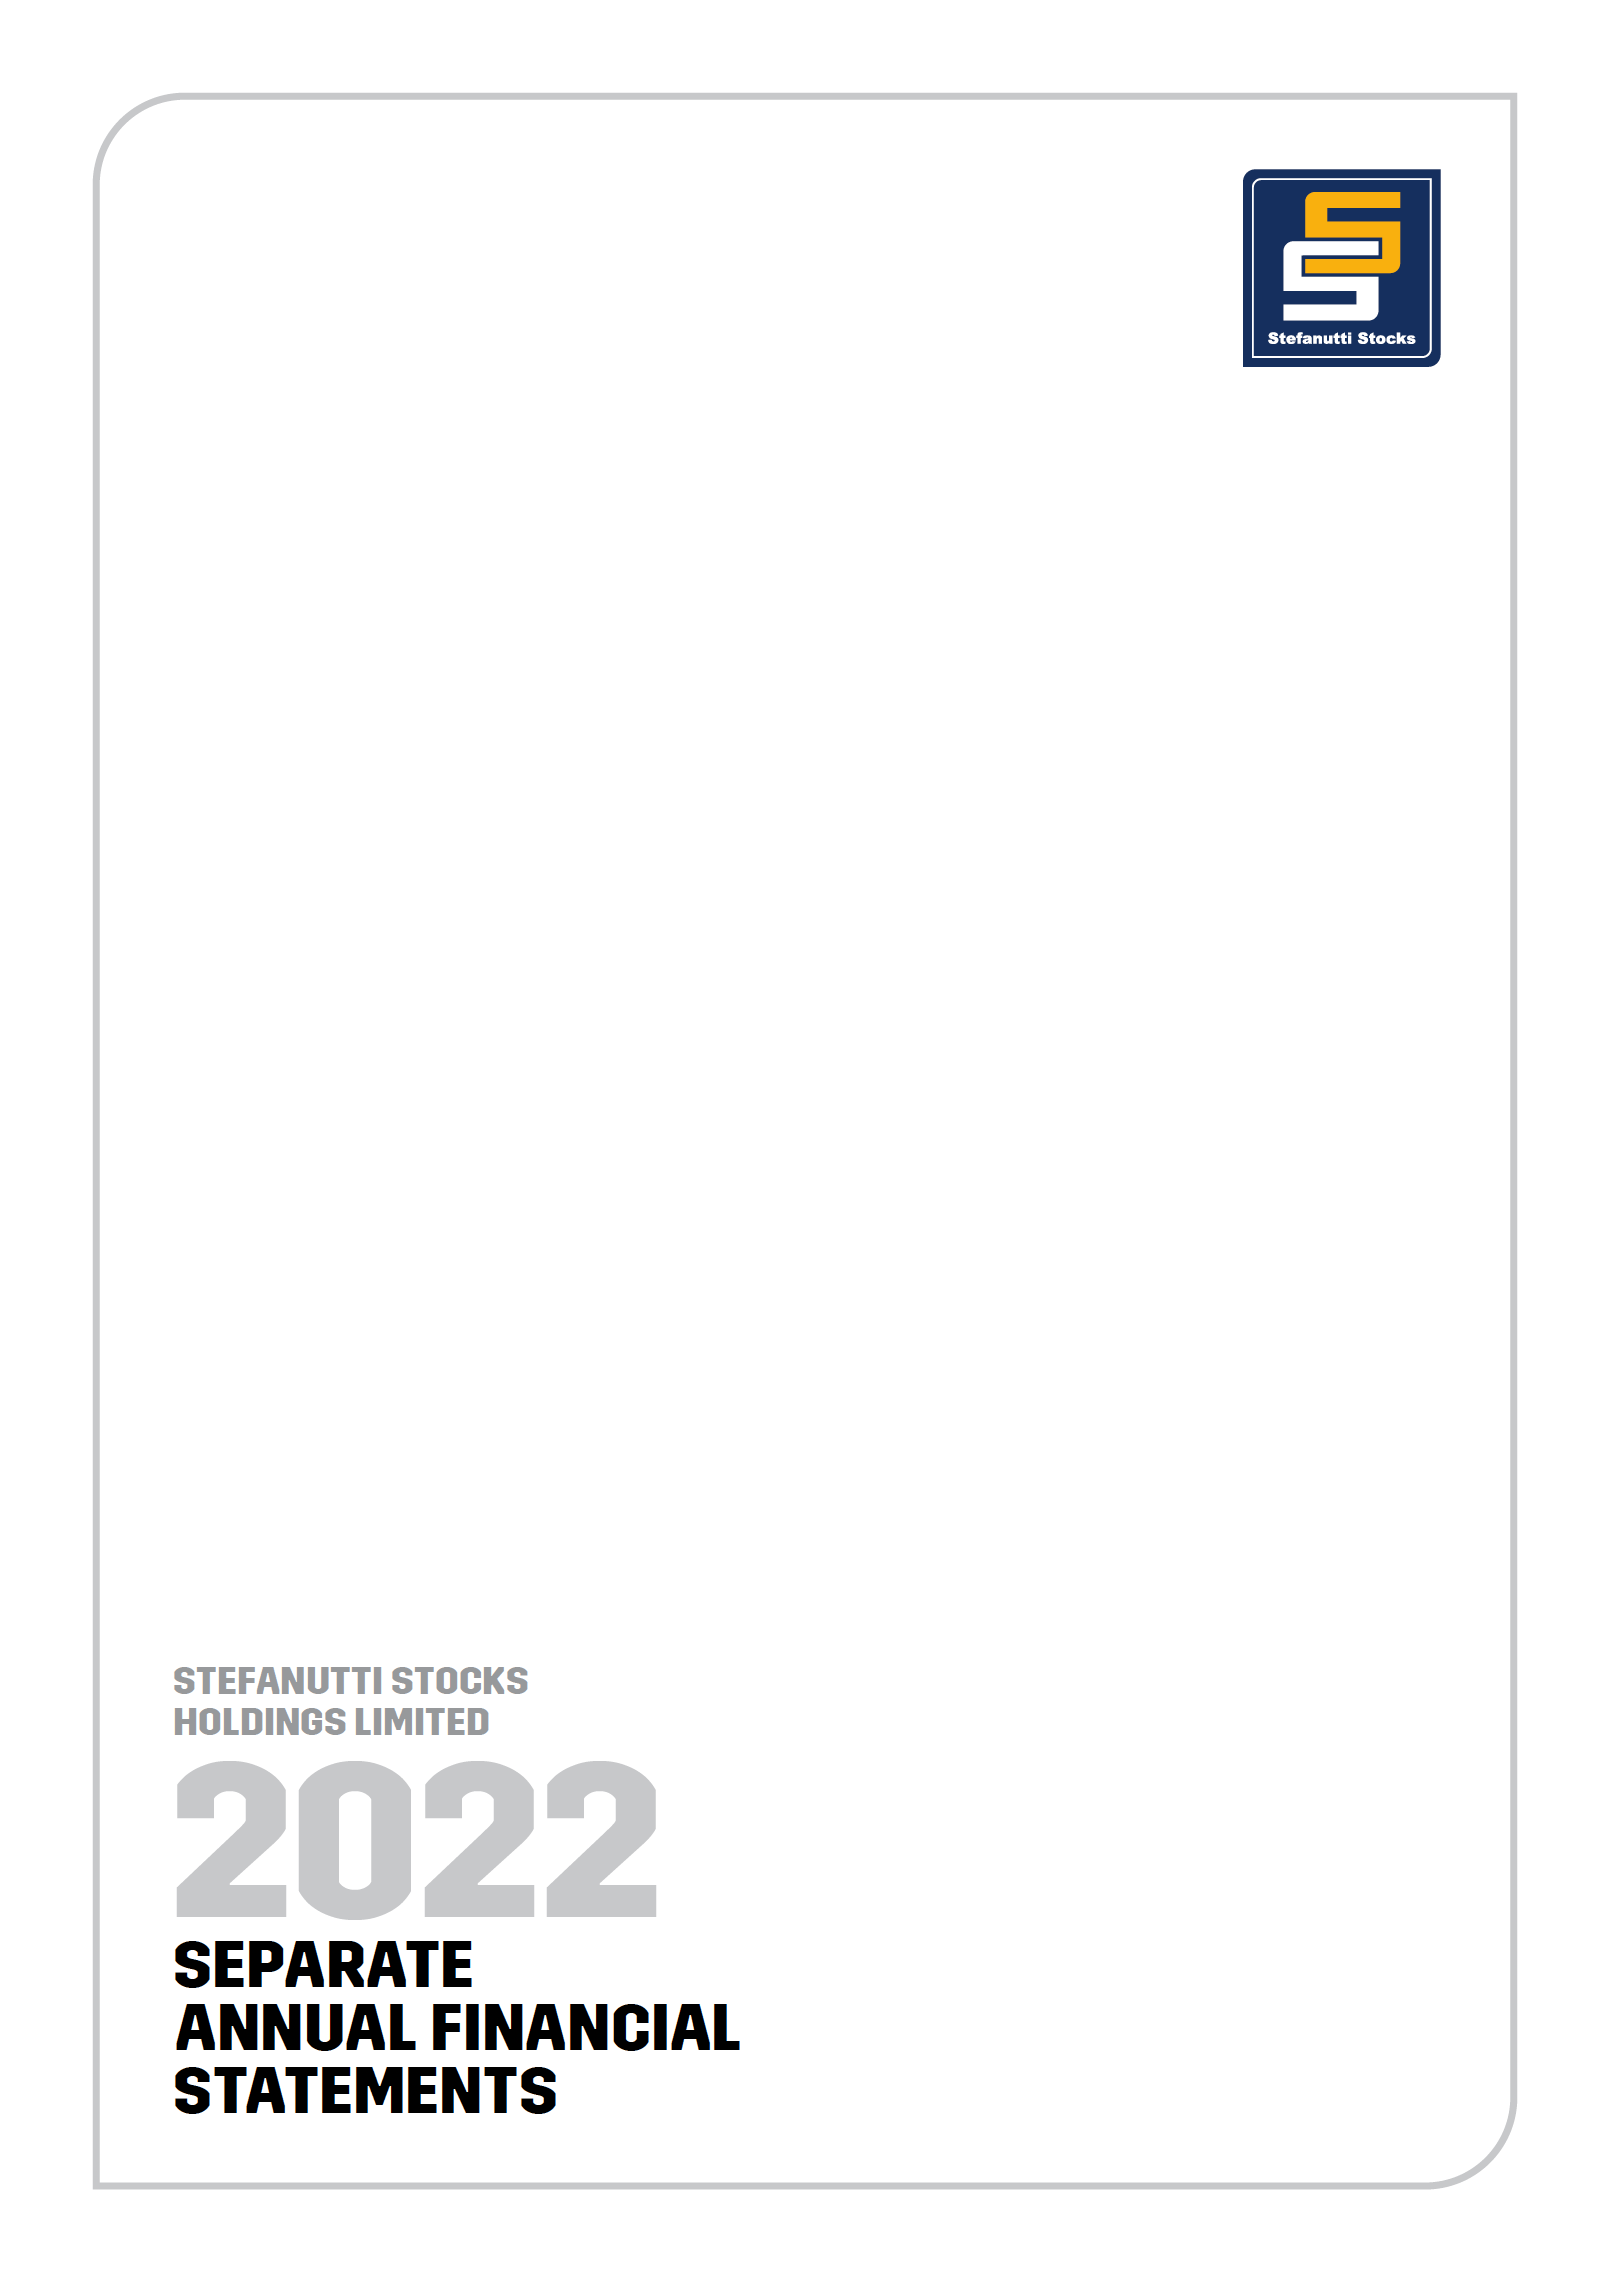 Stefanutti Stocks Holdings Annual Financial Statements 2022